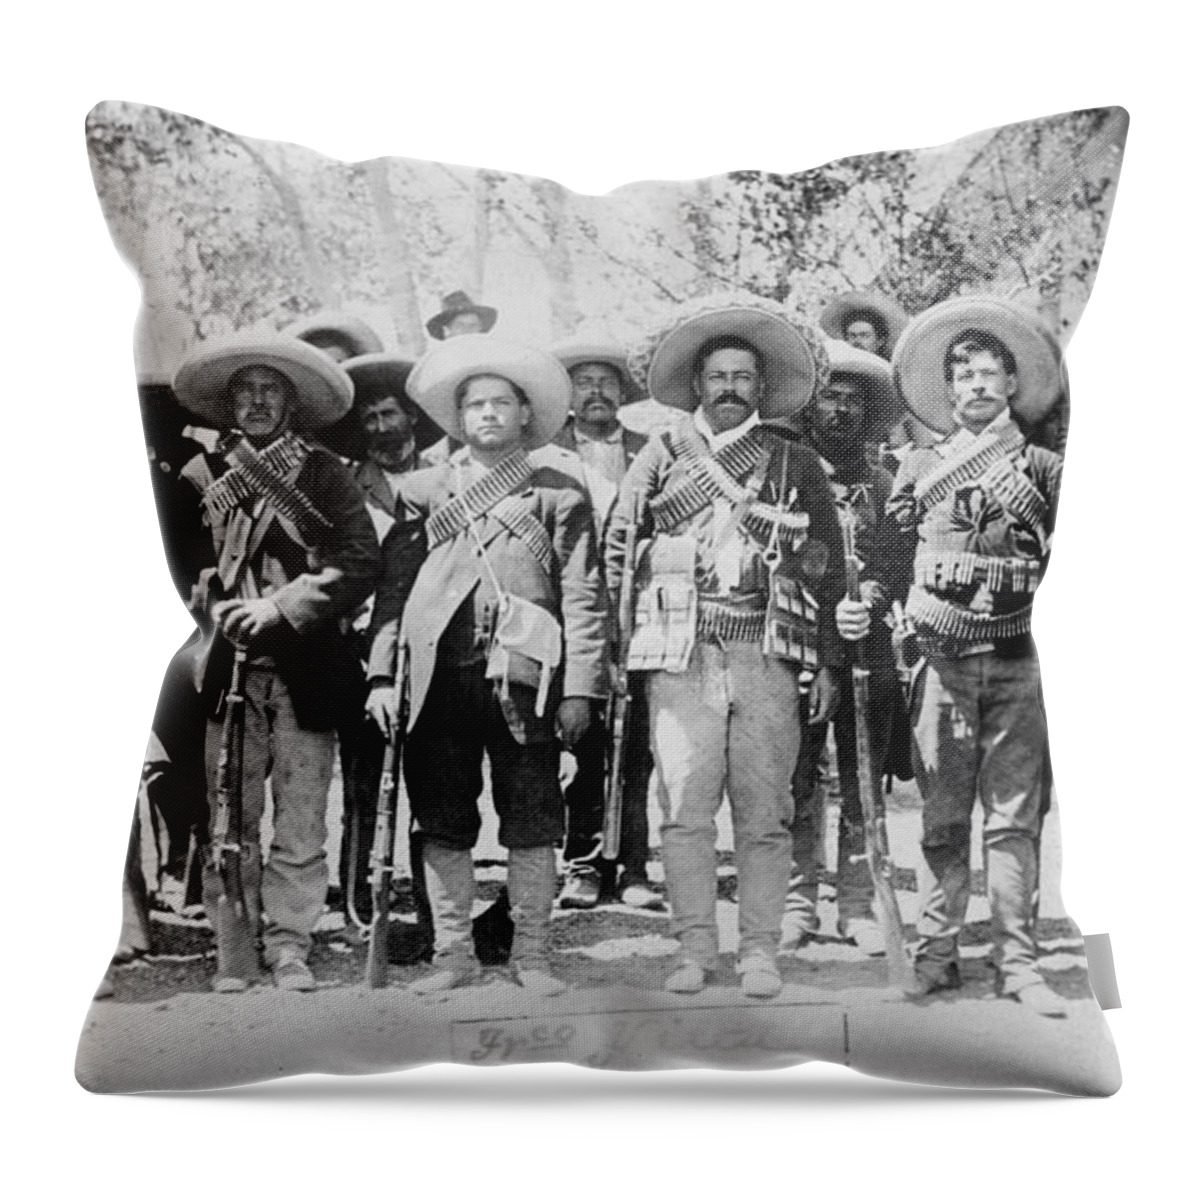 1913 Throw Pillow featuring the photograph Francisco Pancho Villa by Granger